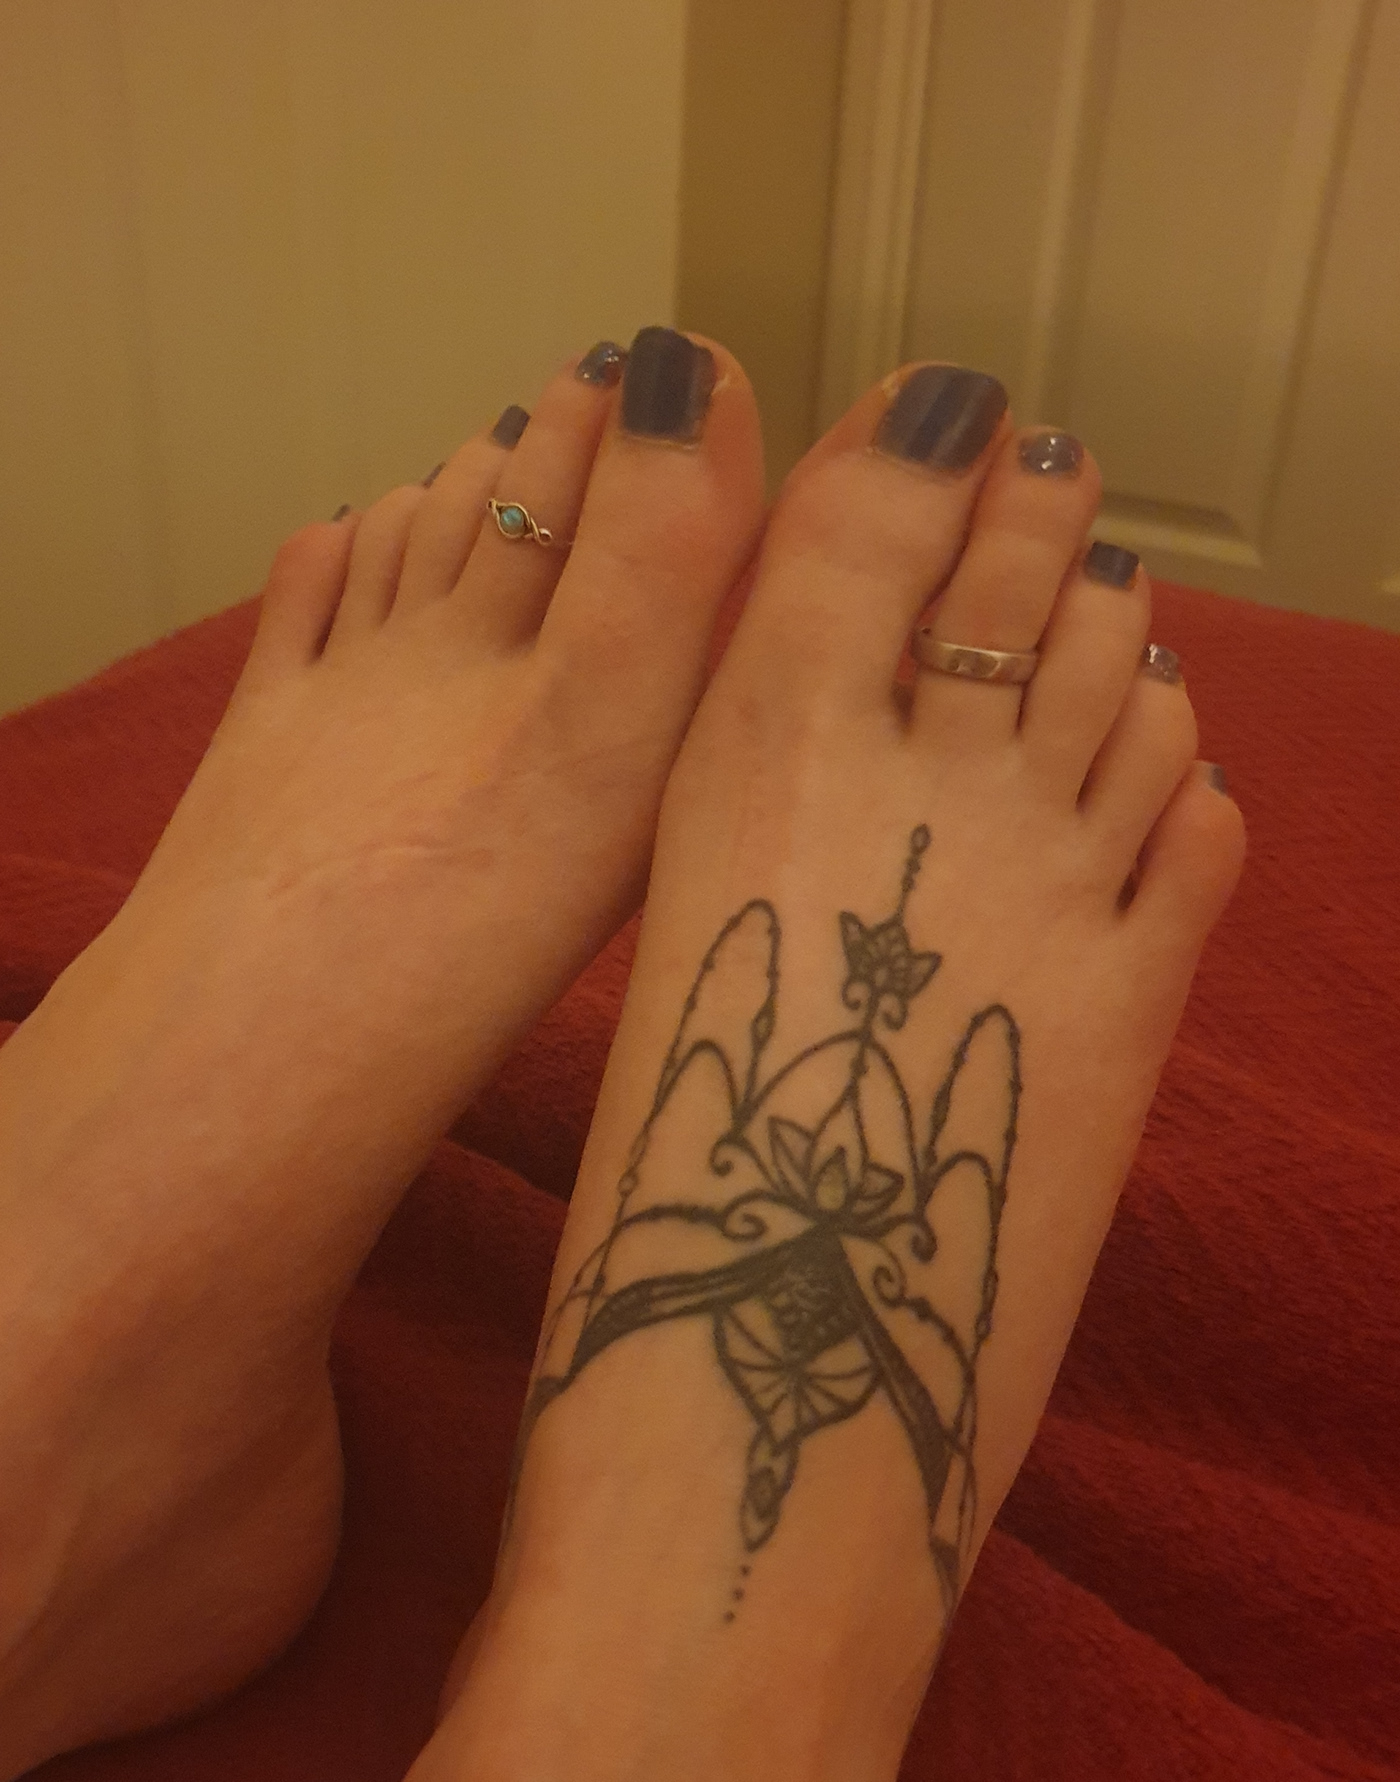 cute desire feet nylon sexy toes